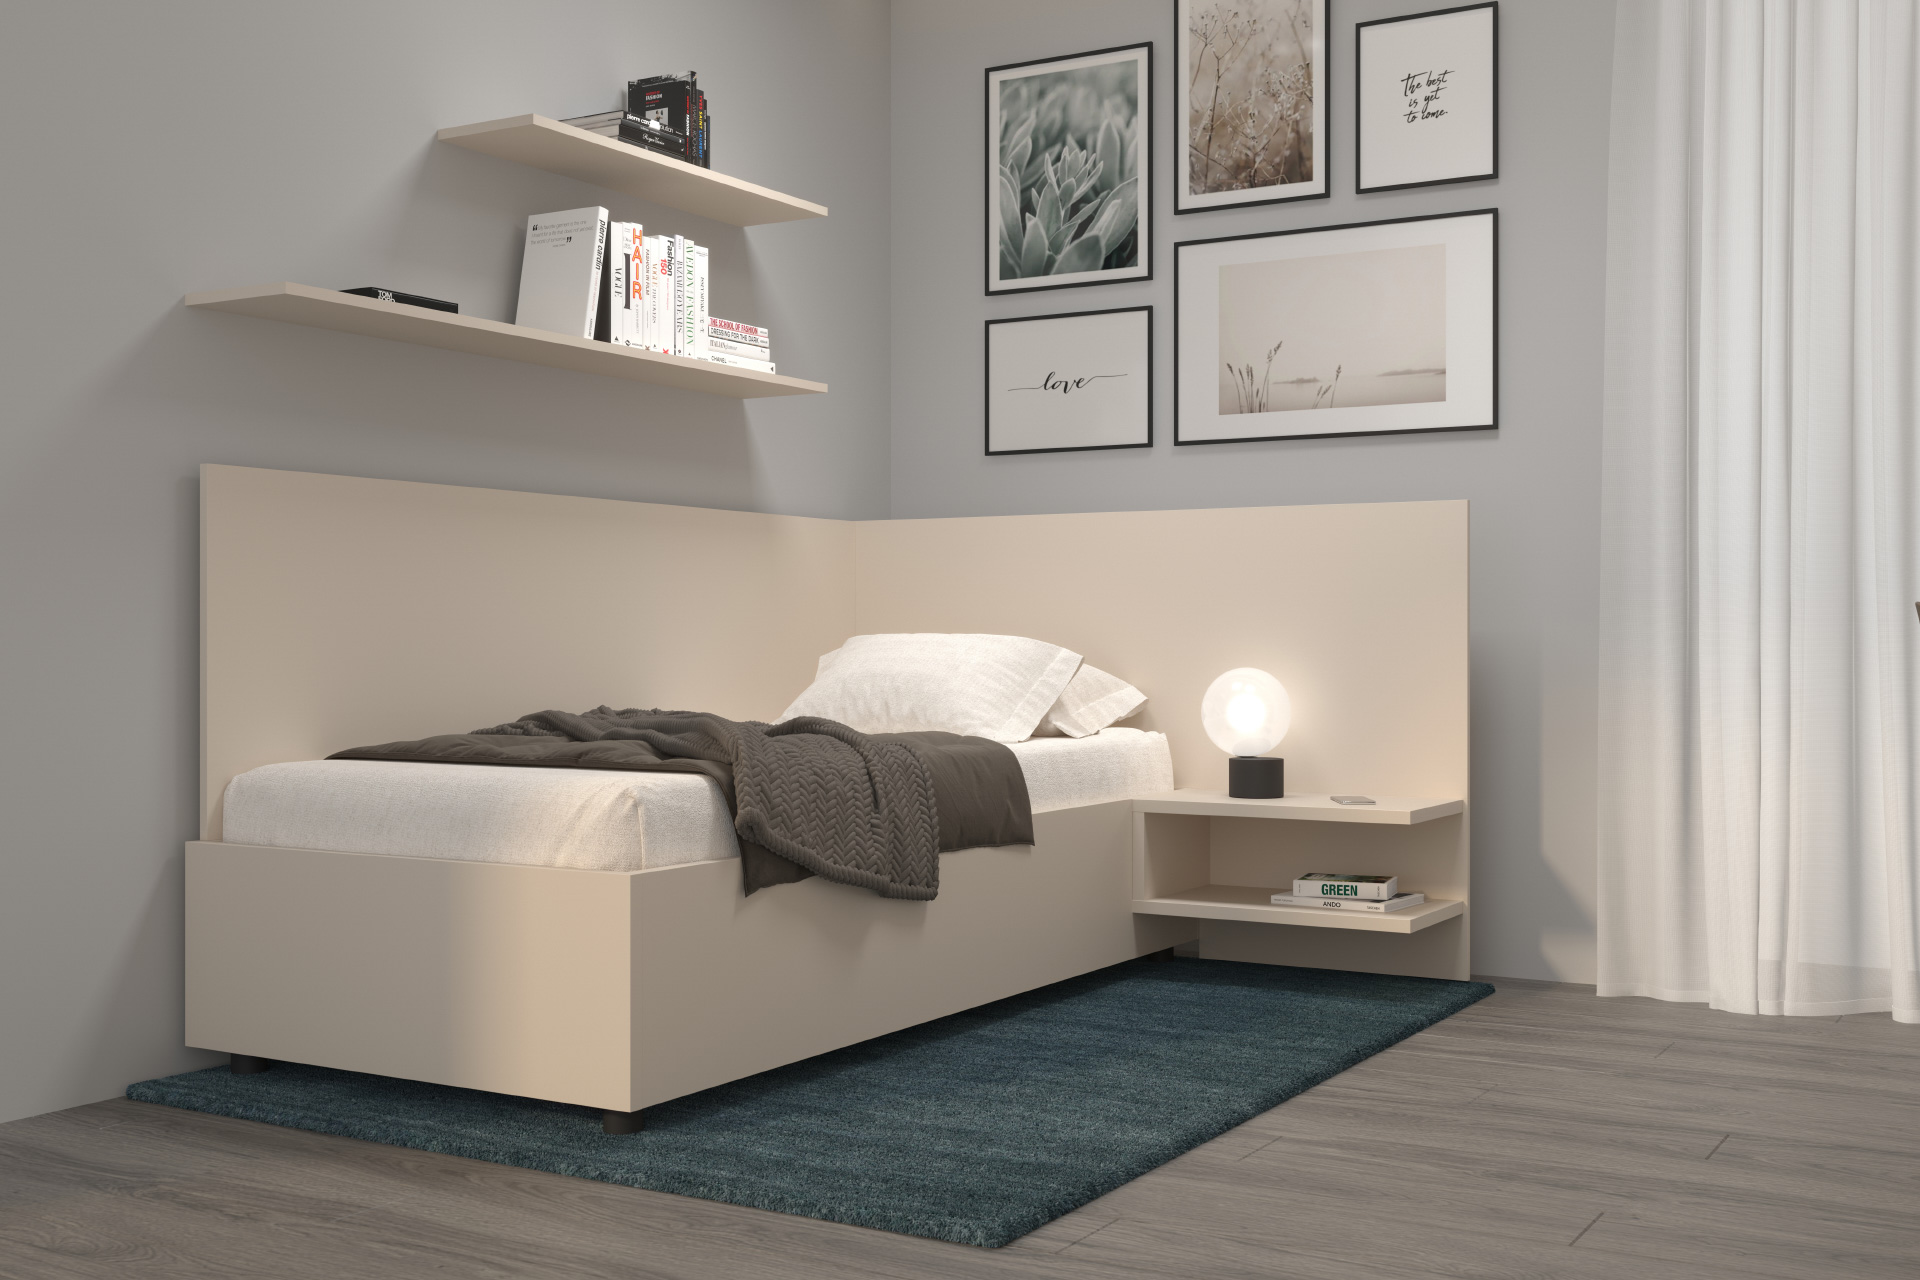 Hanák SALY bedroom Universal and minimalist design